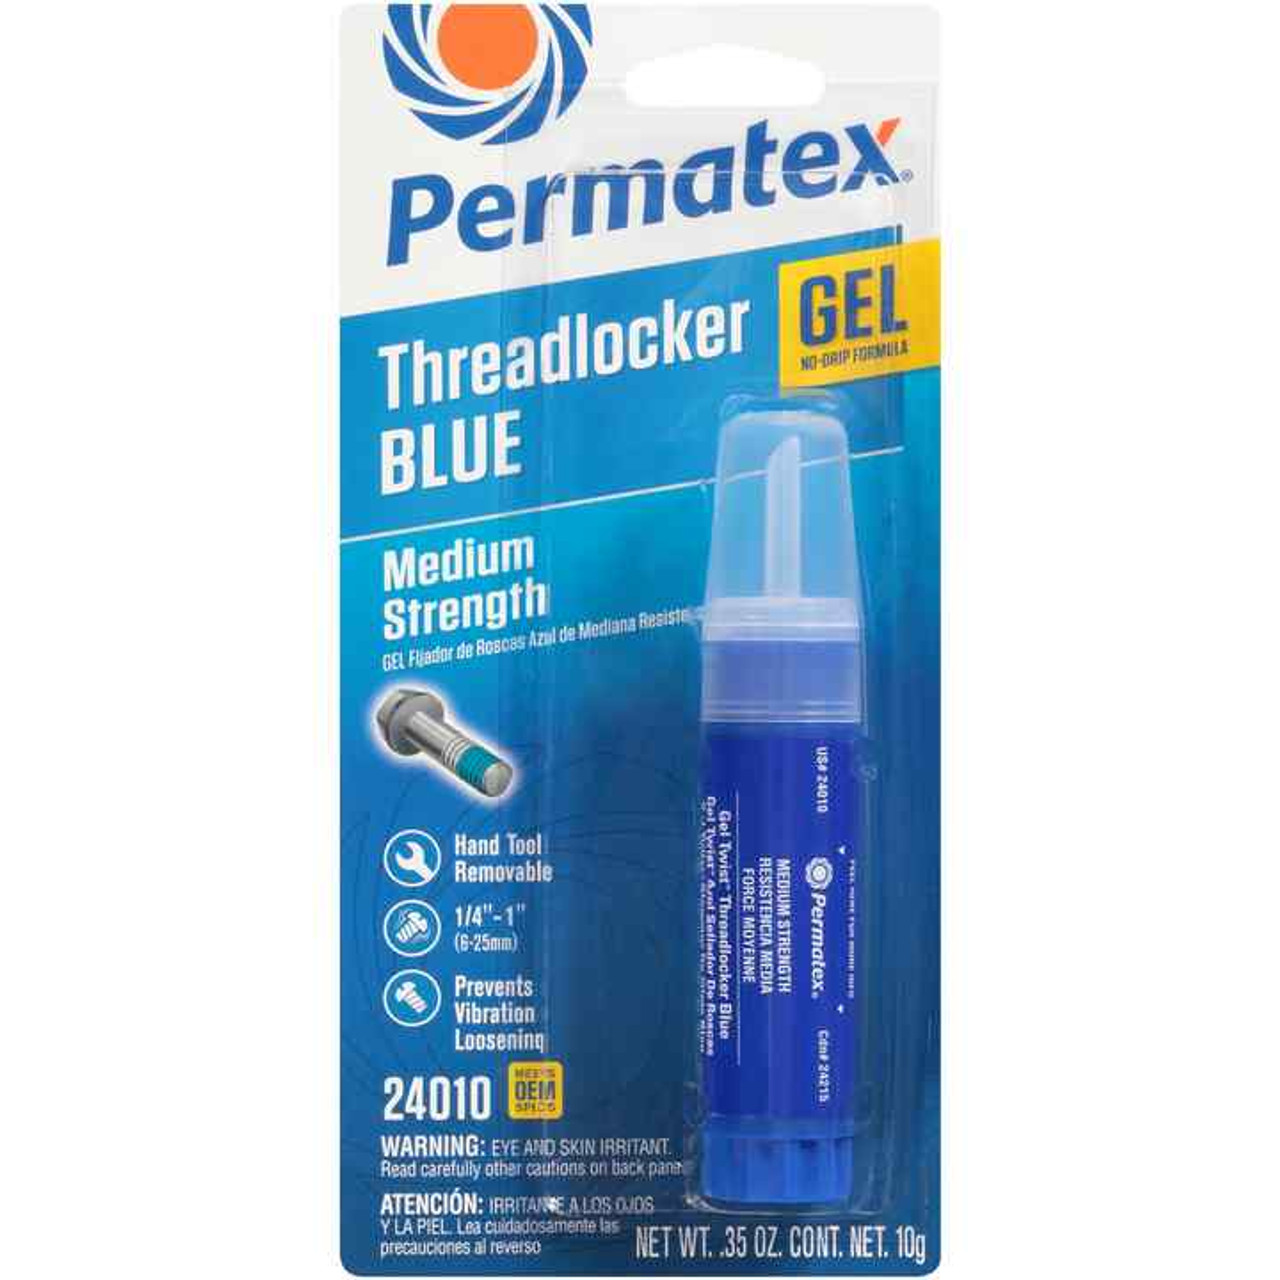 Permatex Blue Threadlocker- Medium Strength- 10g Gel Twist Applicator (24010)